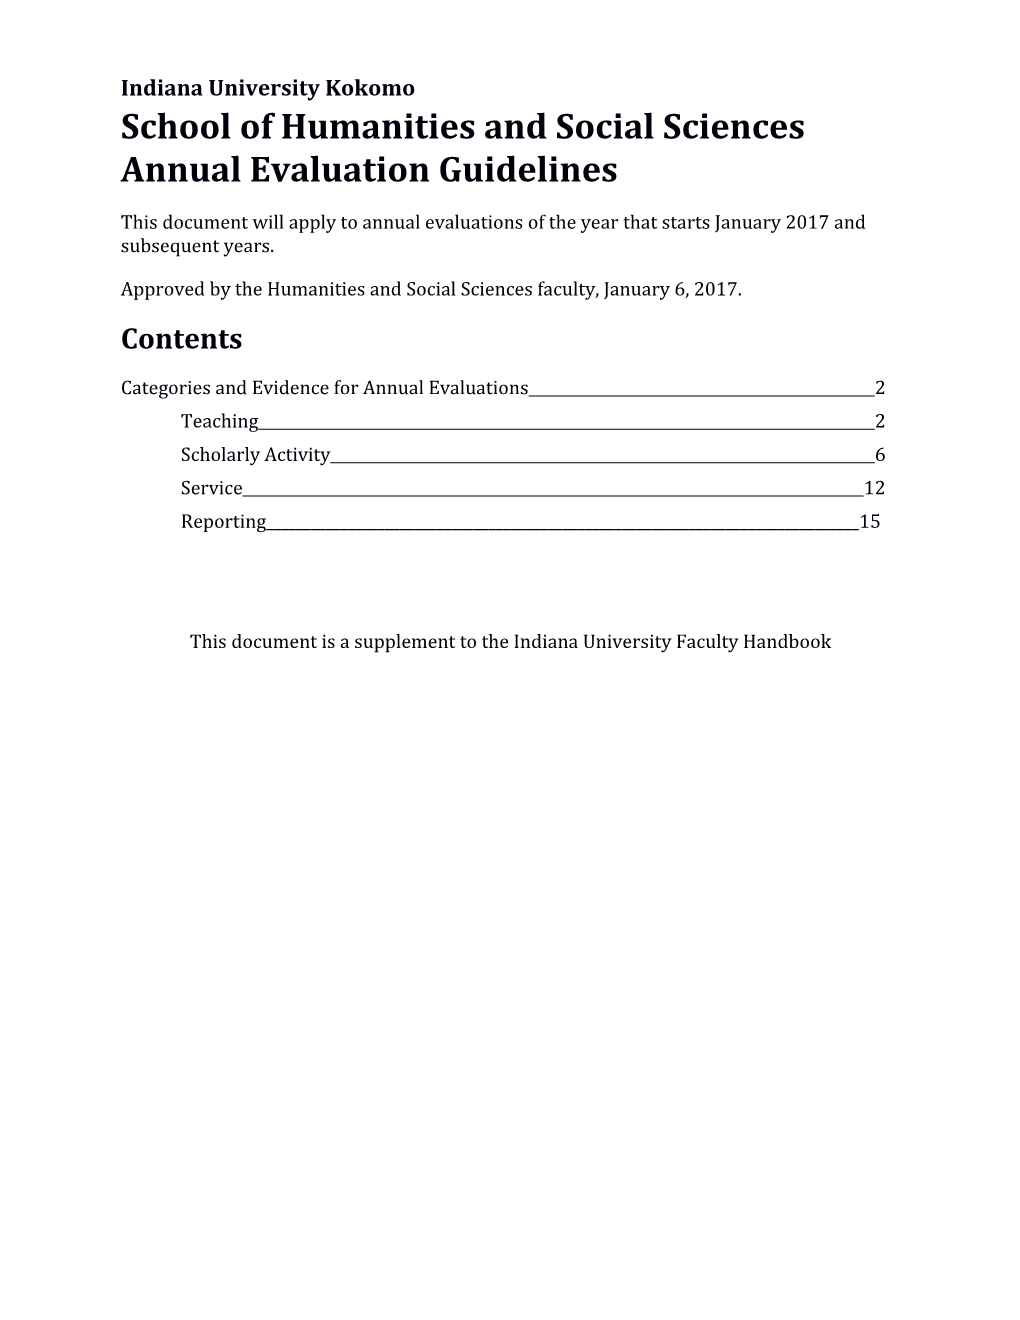 IU Kokomo HSS Annual Evaluation Guidelines 6